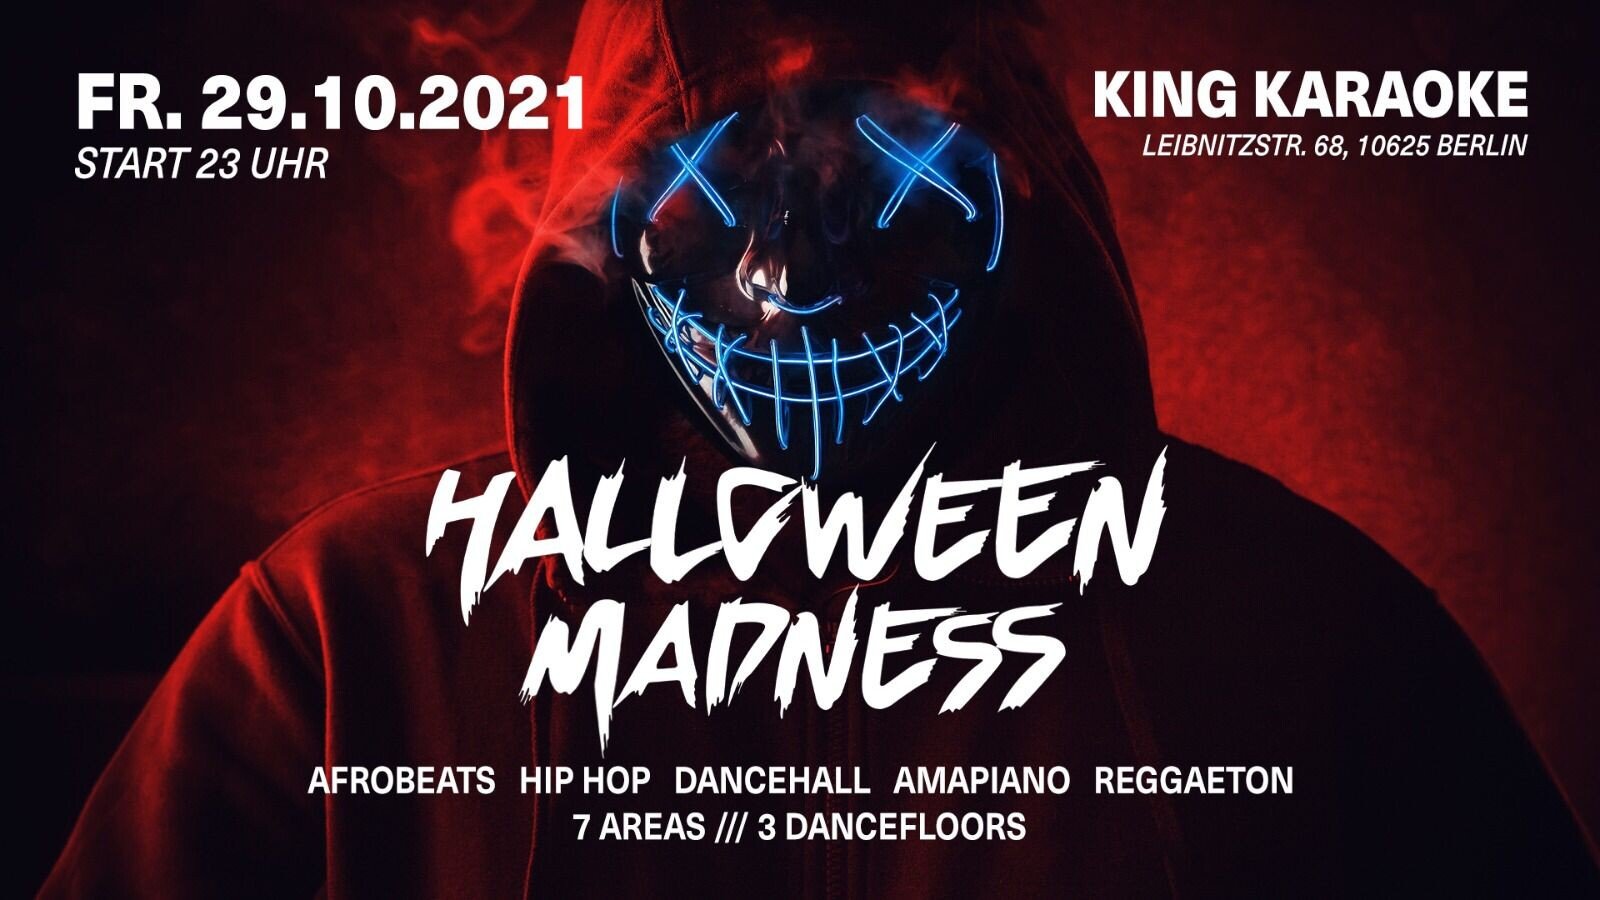 King Karaoke Bar  Berlin Halloween Madness